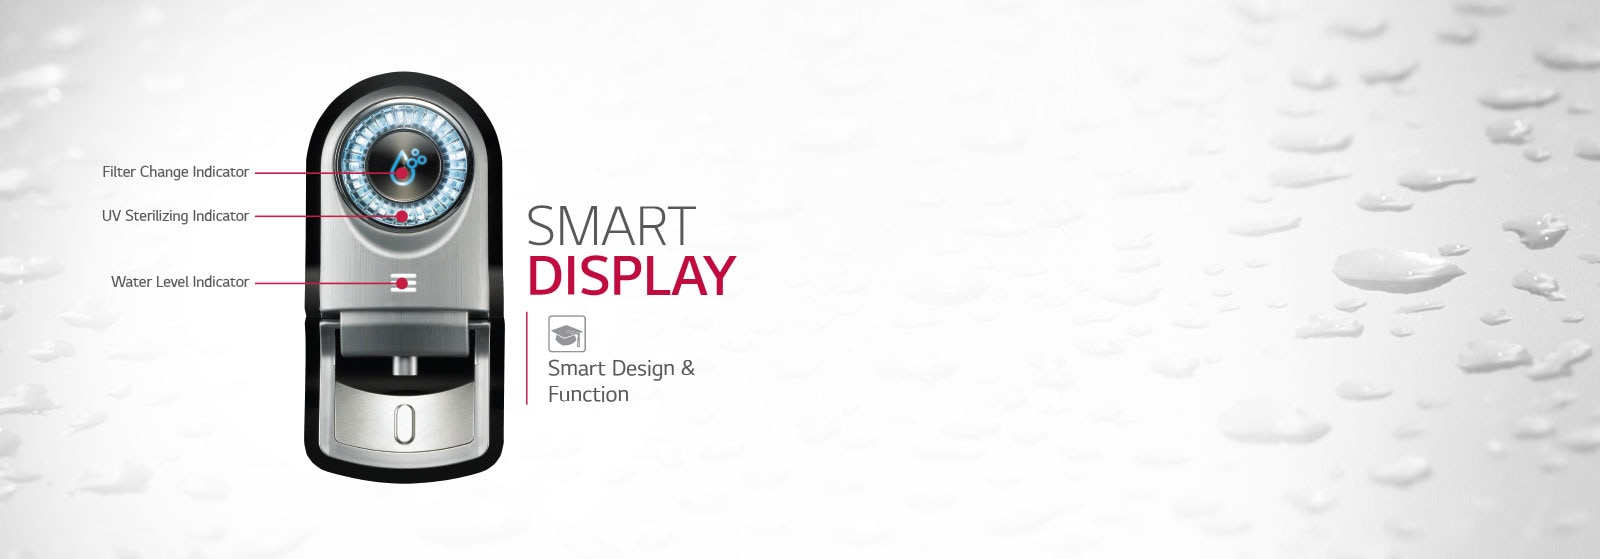 Smart Display3